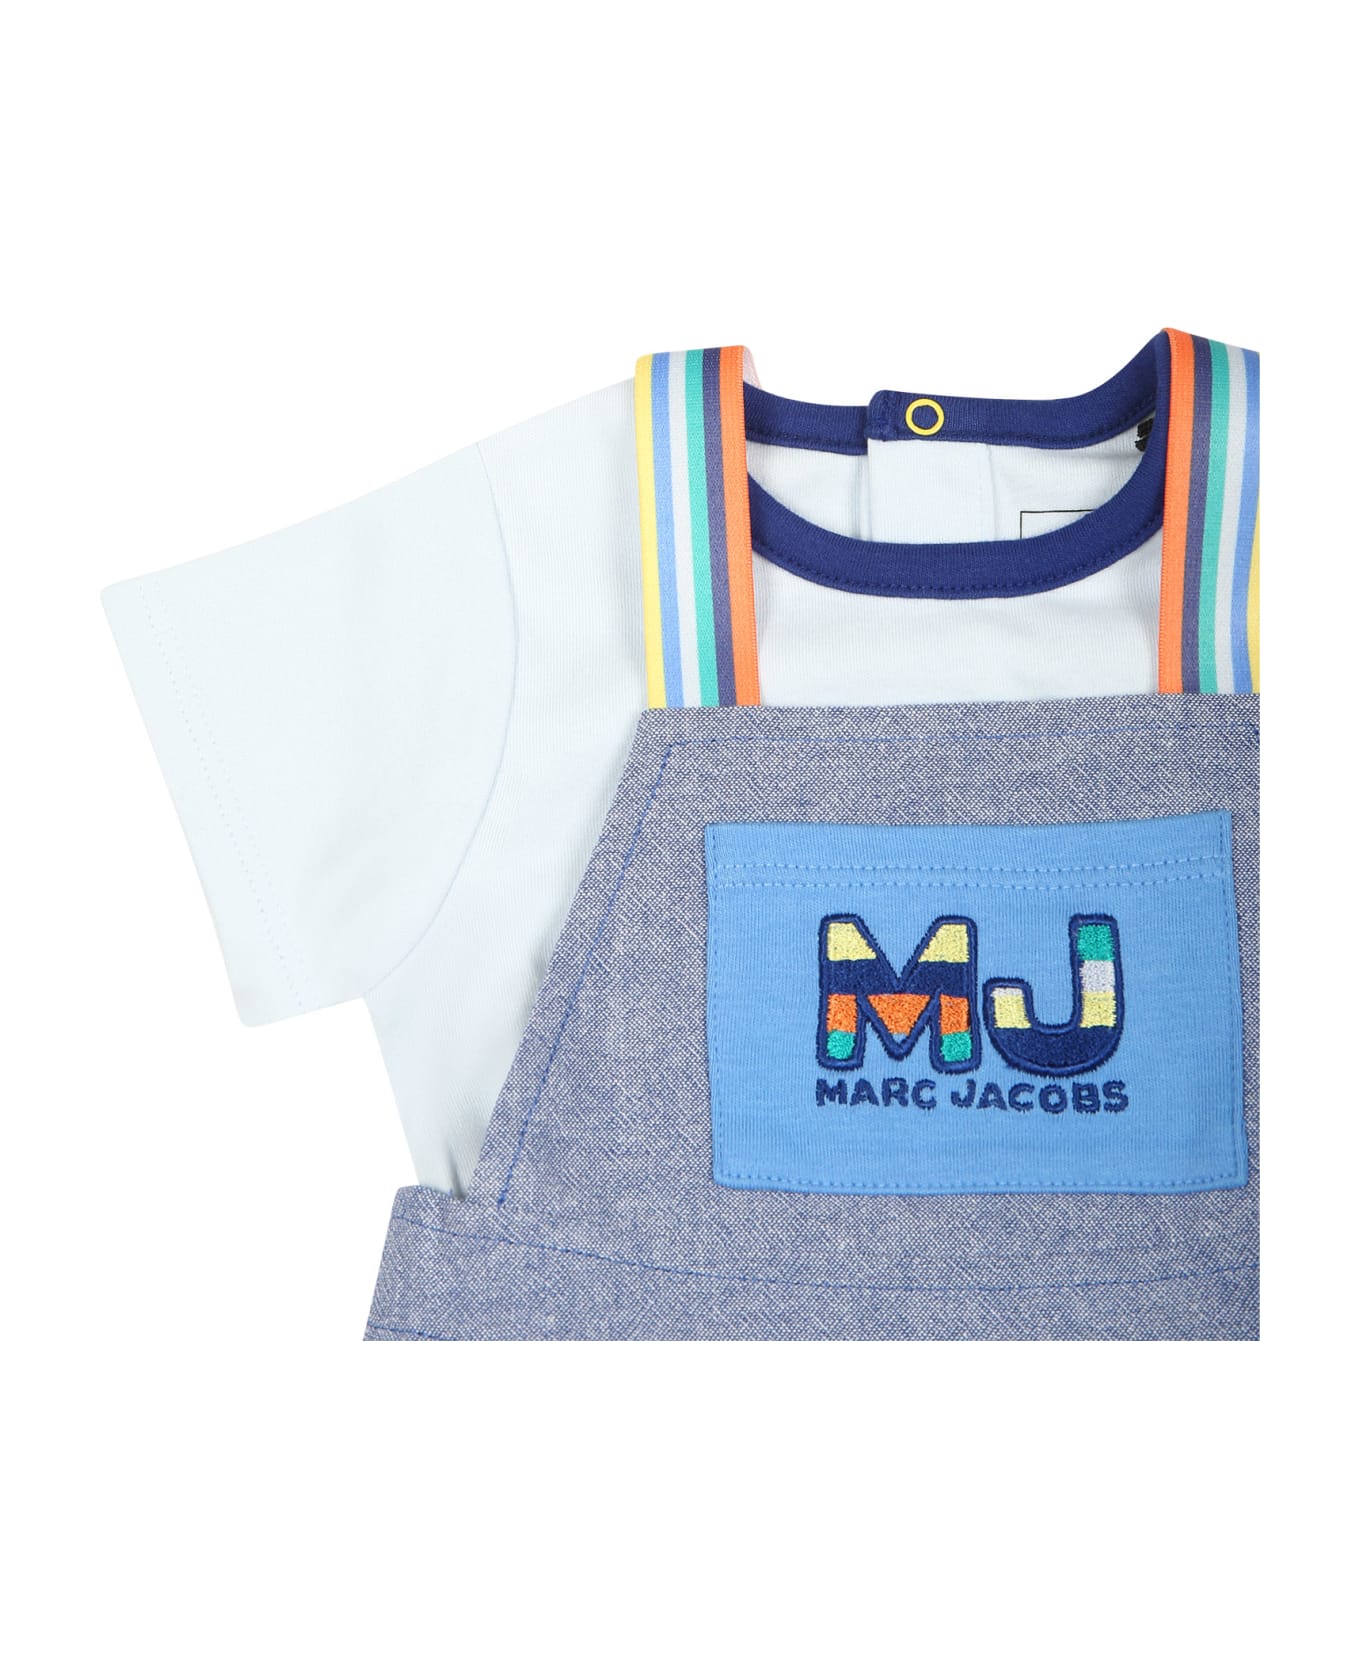 Marc Jacobs Light Blue Suit For Baby Boy With Logo - Denim コート＆ジャケット